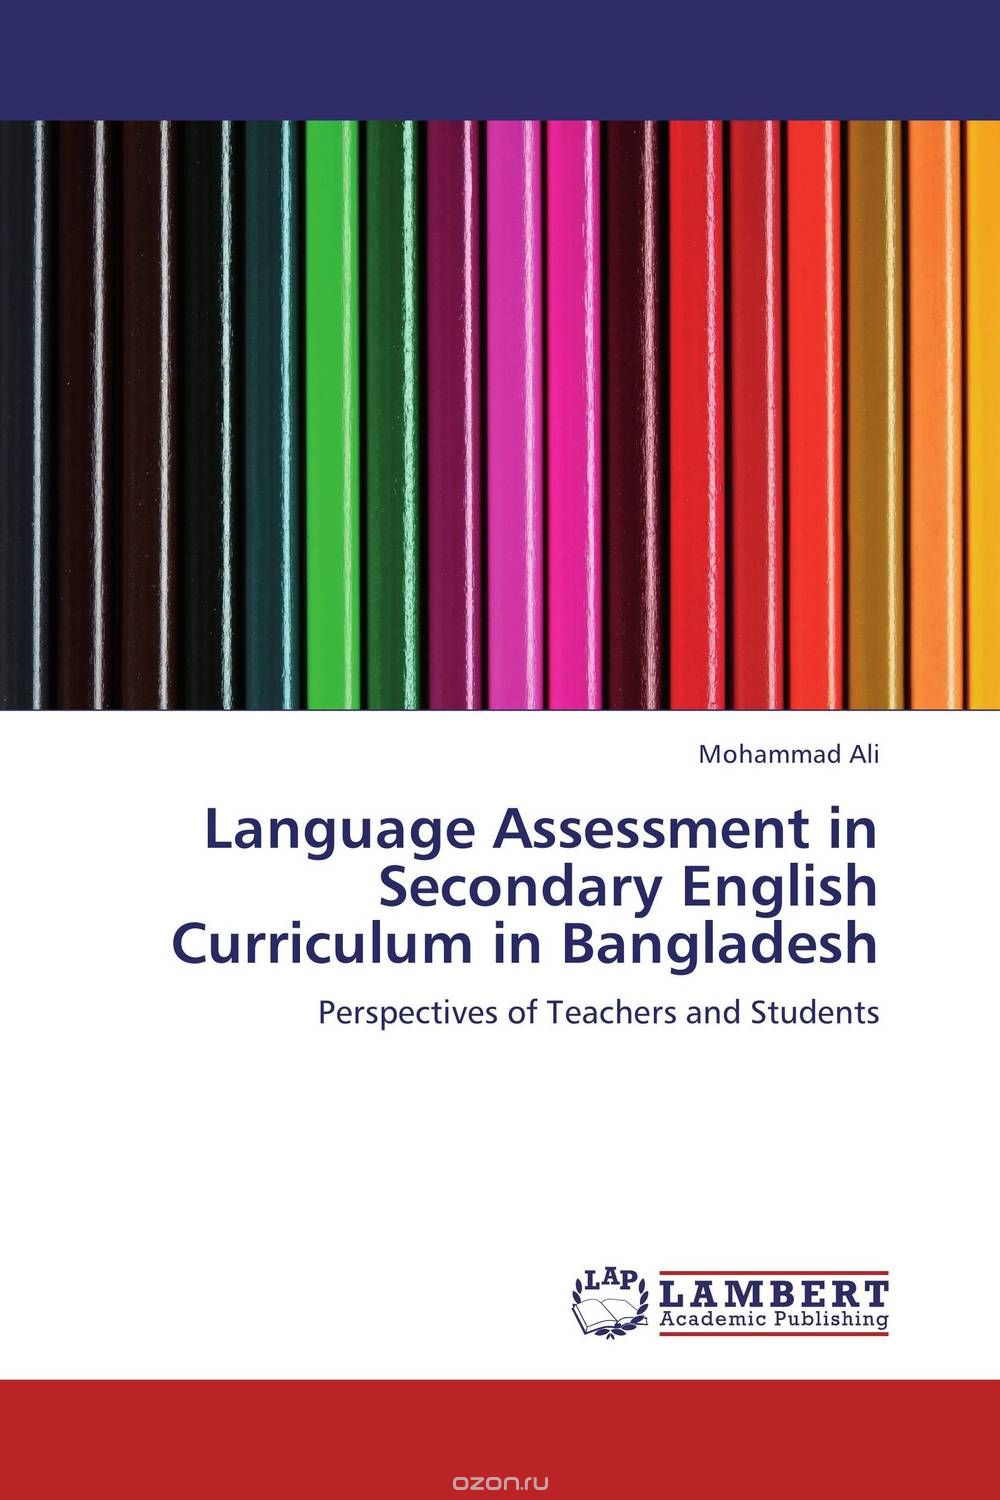 Скачать книгу "Language Assessment in Secondary English Curriculum in Bangladesh"